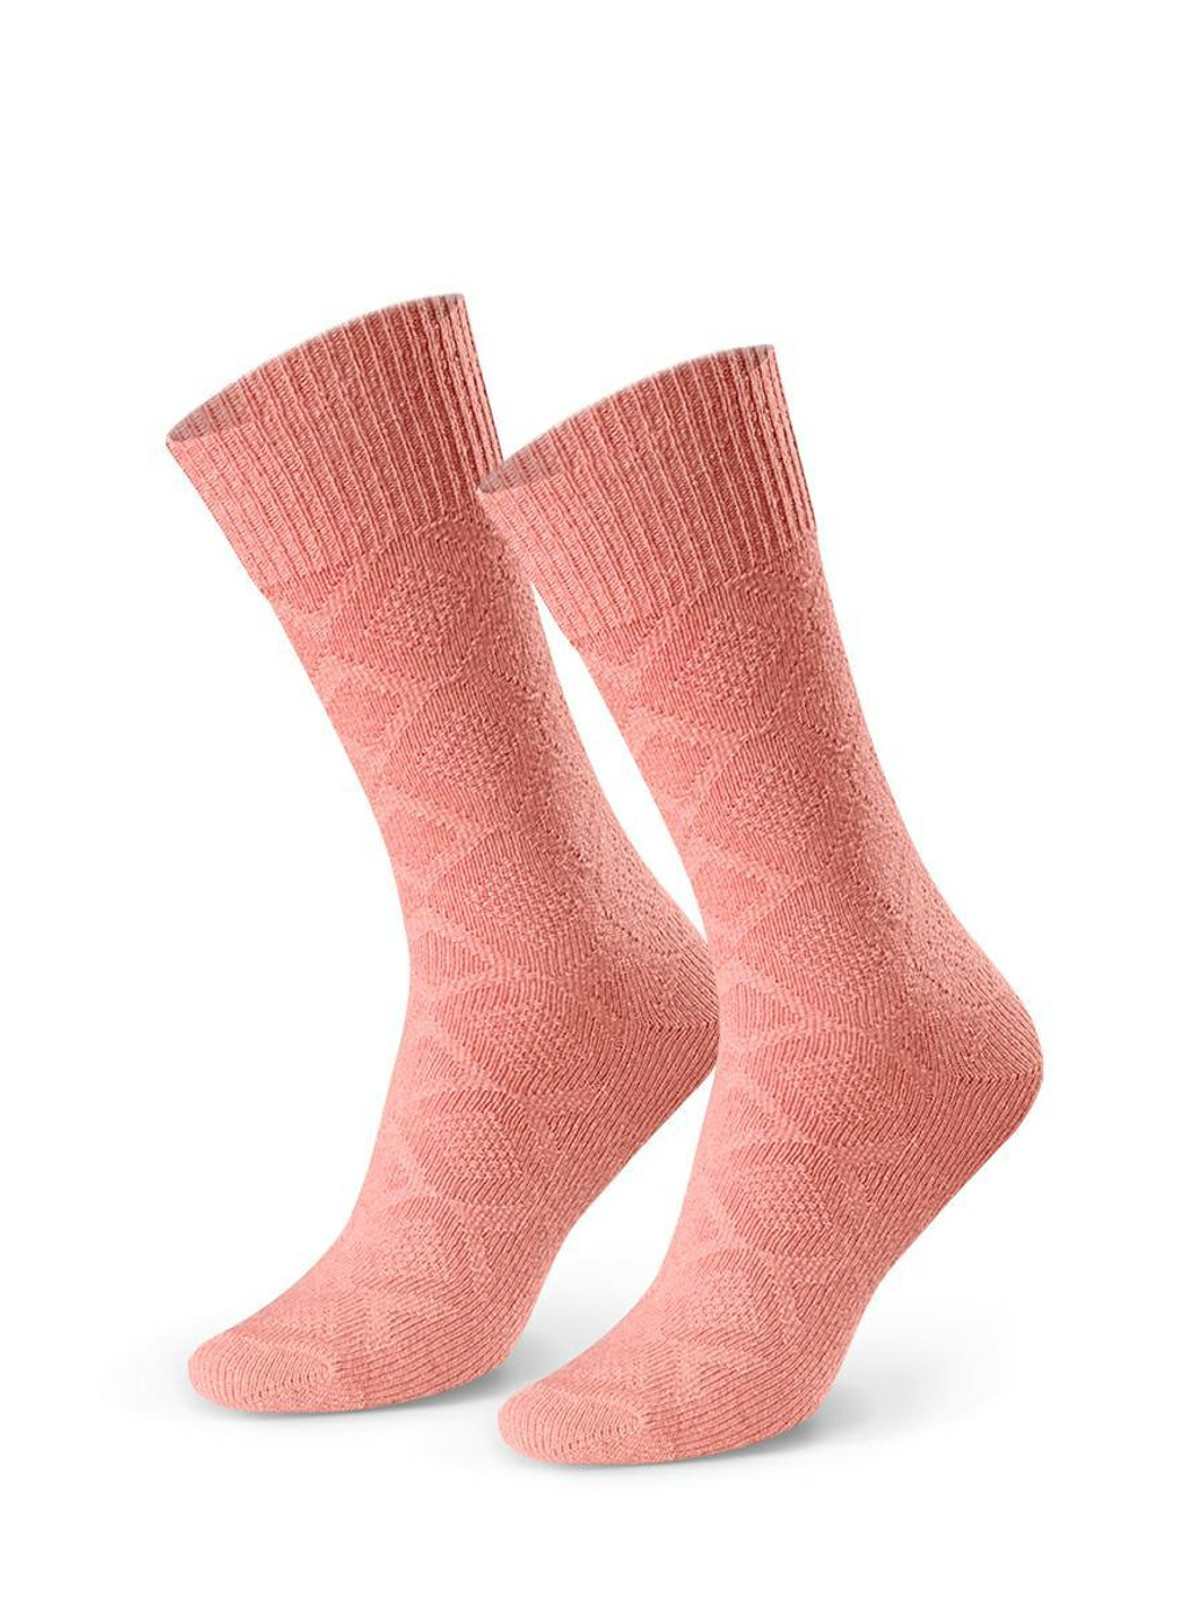 Dámské vlněné vzorované ponožky Steven art.093 35-40 růžová tmavá 38-40